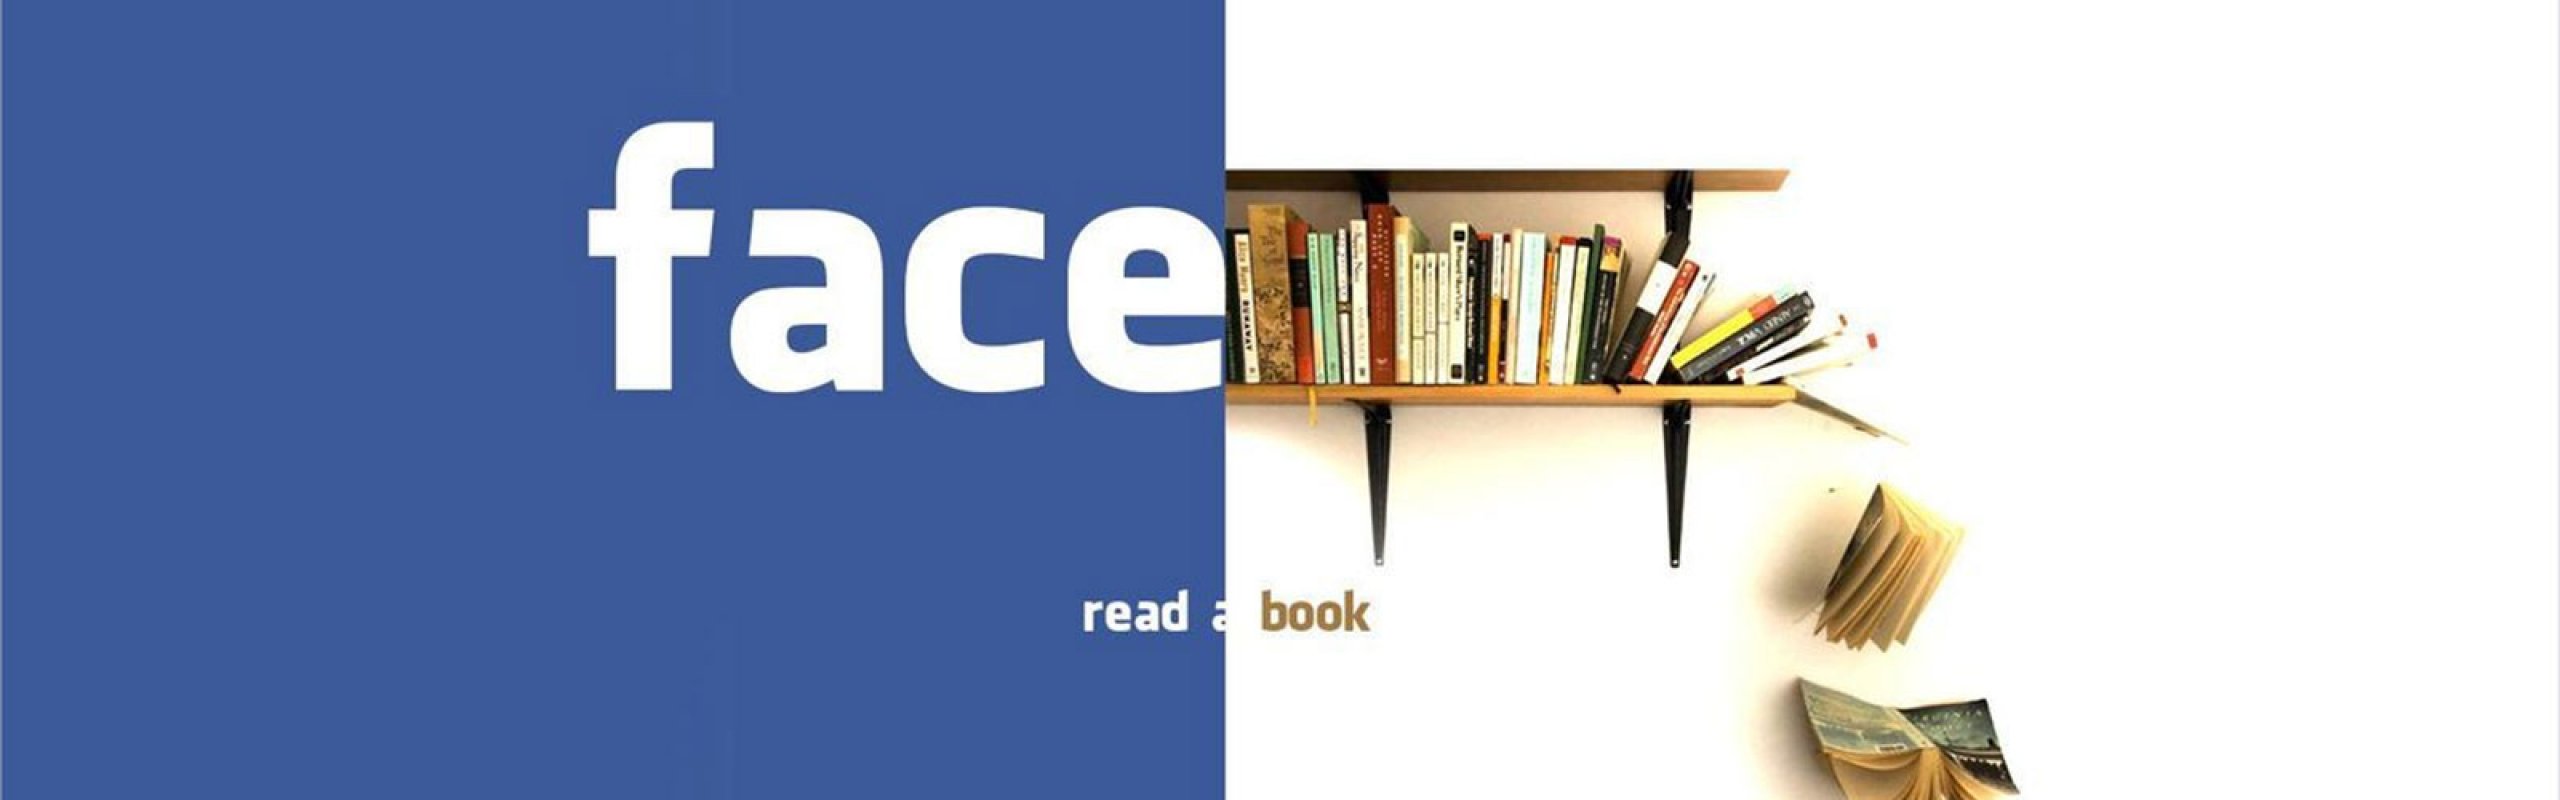 The magic of books or the magic of Facebook?